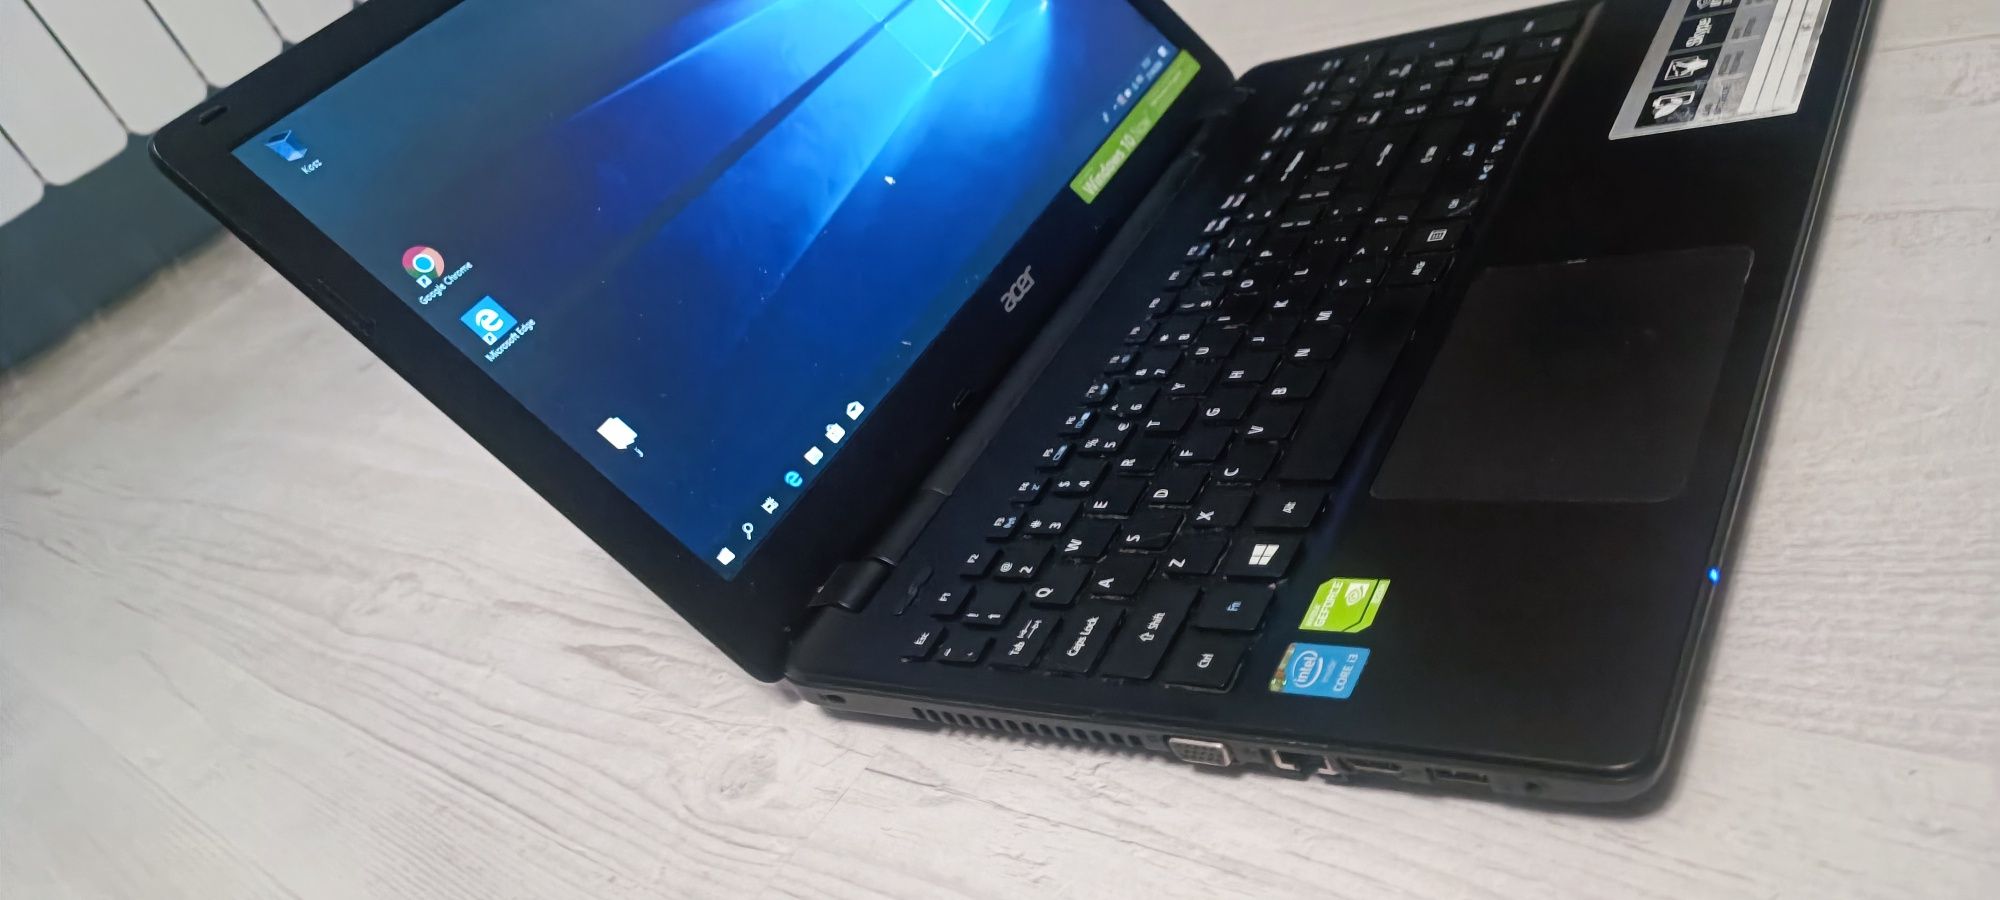 Laptop Acer 571g Intel i3 4gb SSD